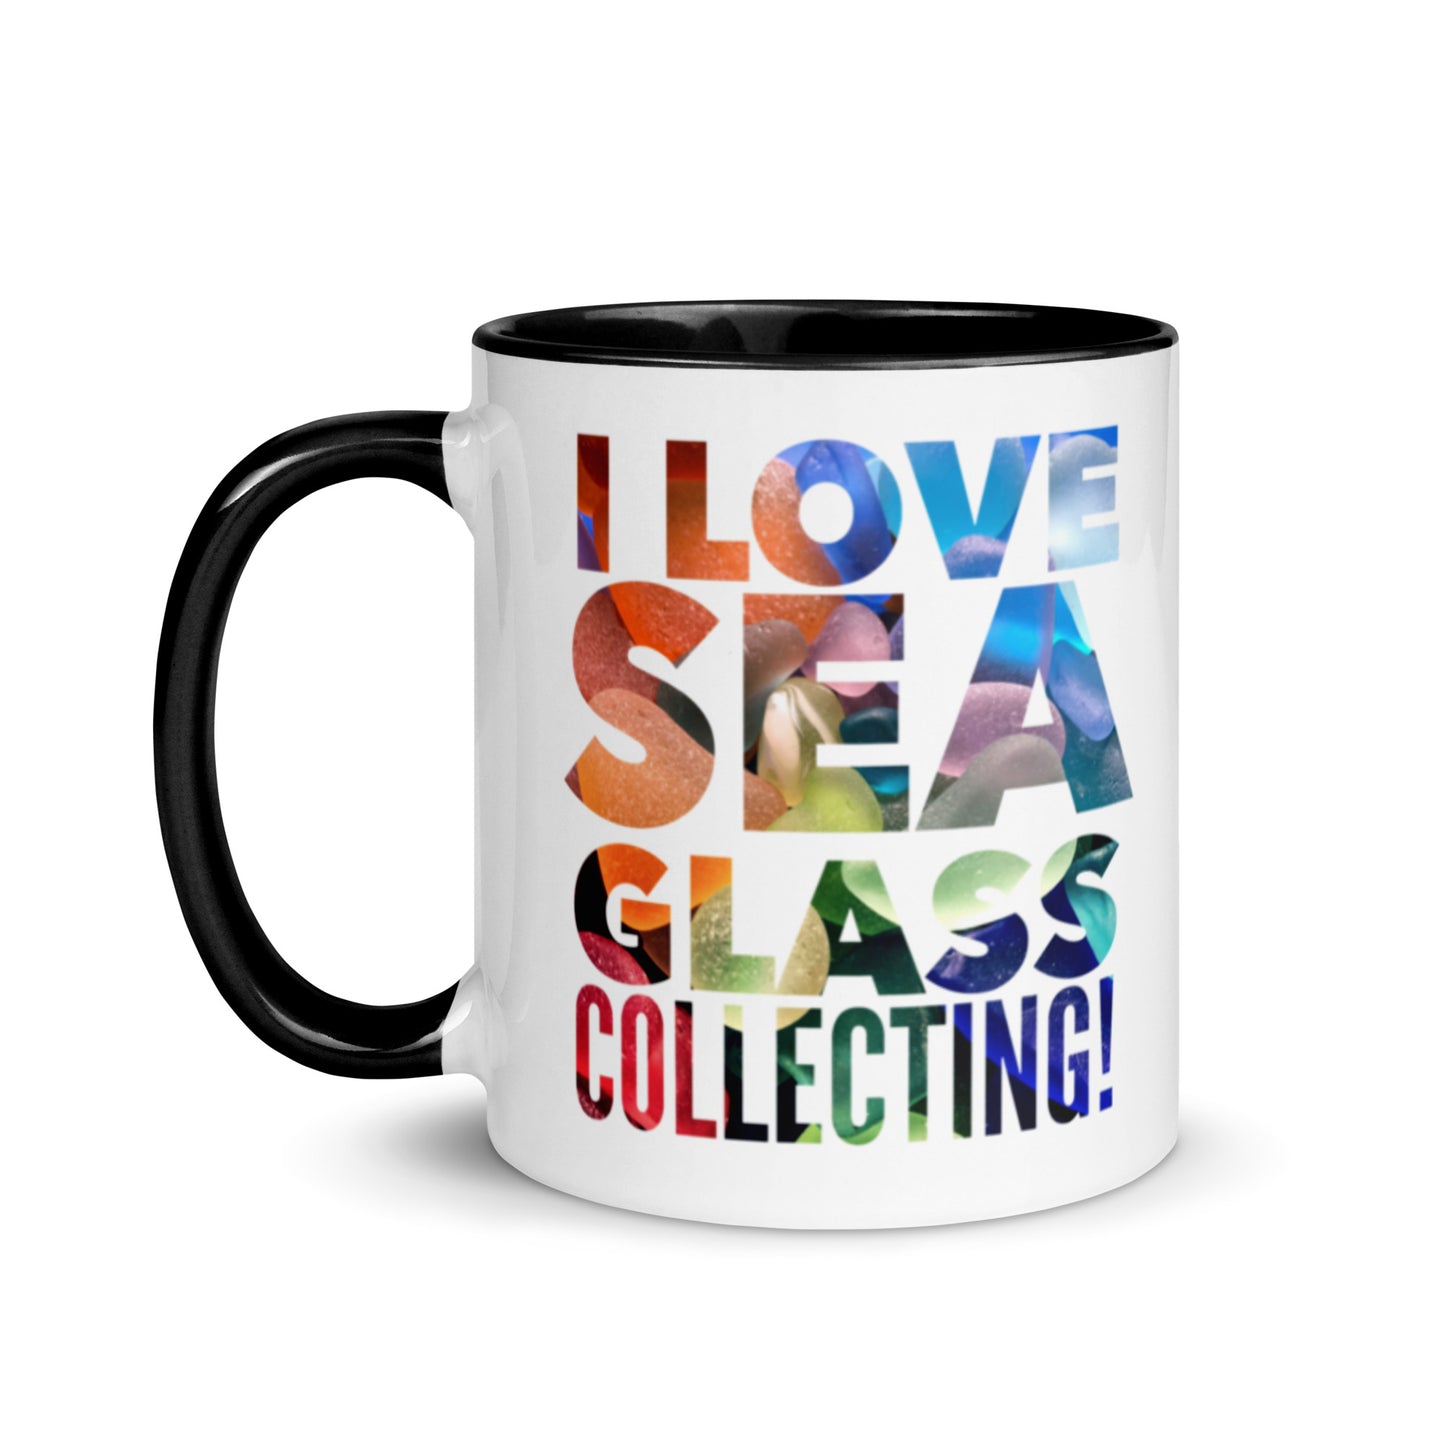 Mug with Color Inside - I Love Sea Glass Collecting